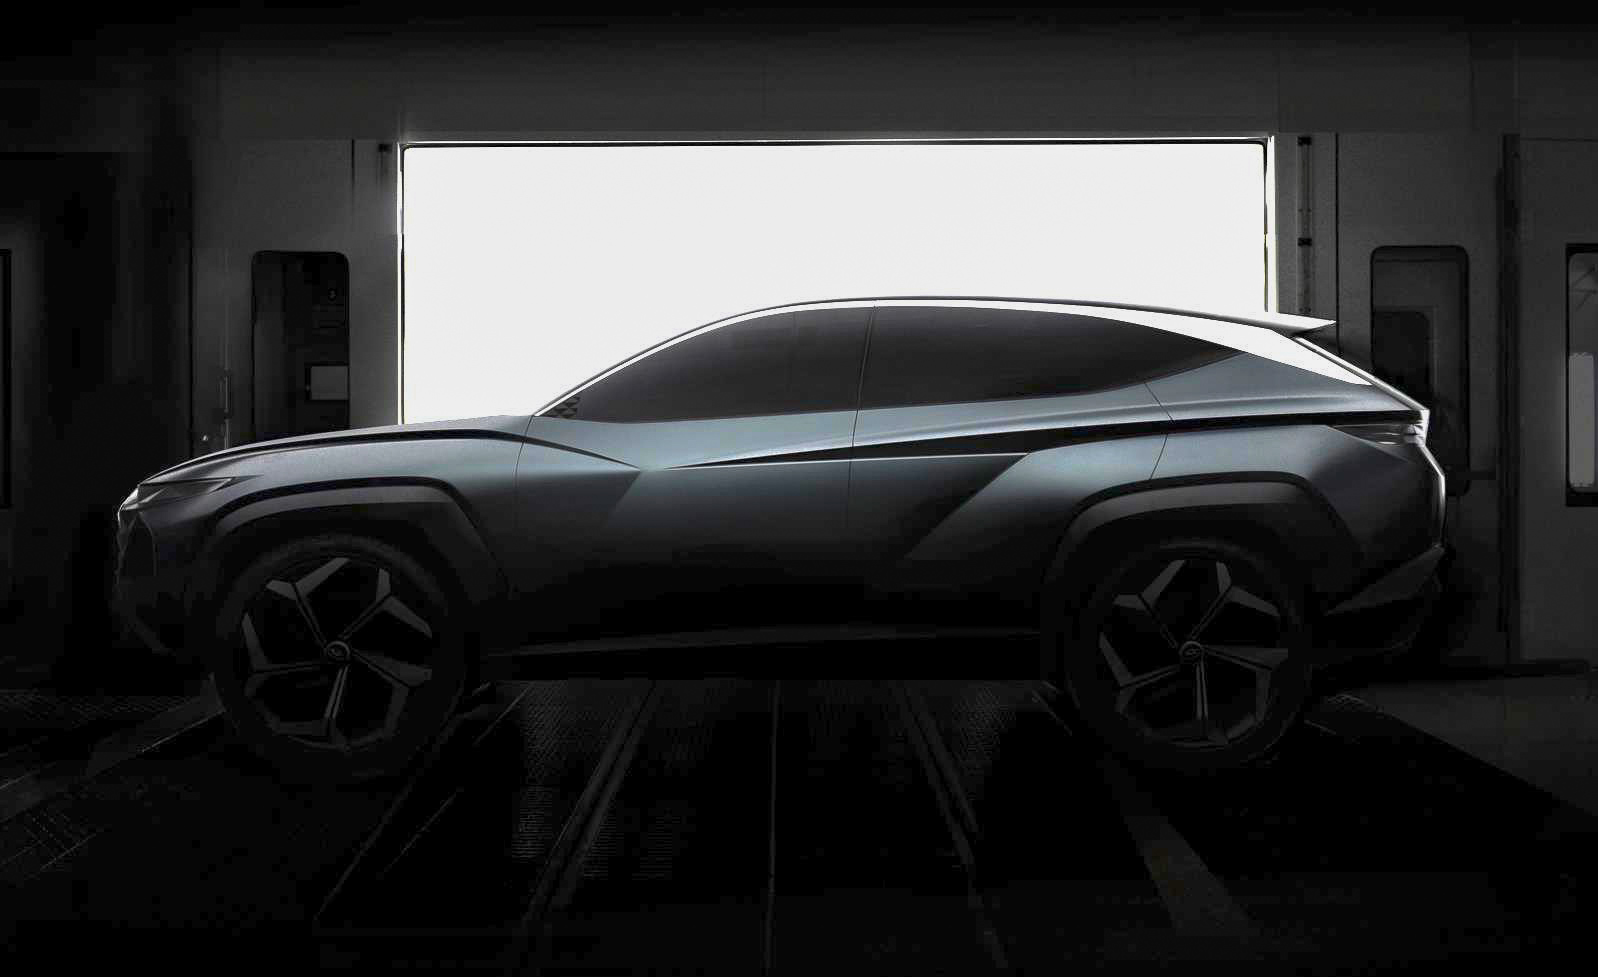 2021 Hyundai Tucson concept to debut at LA Auto